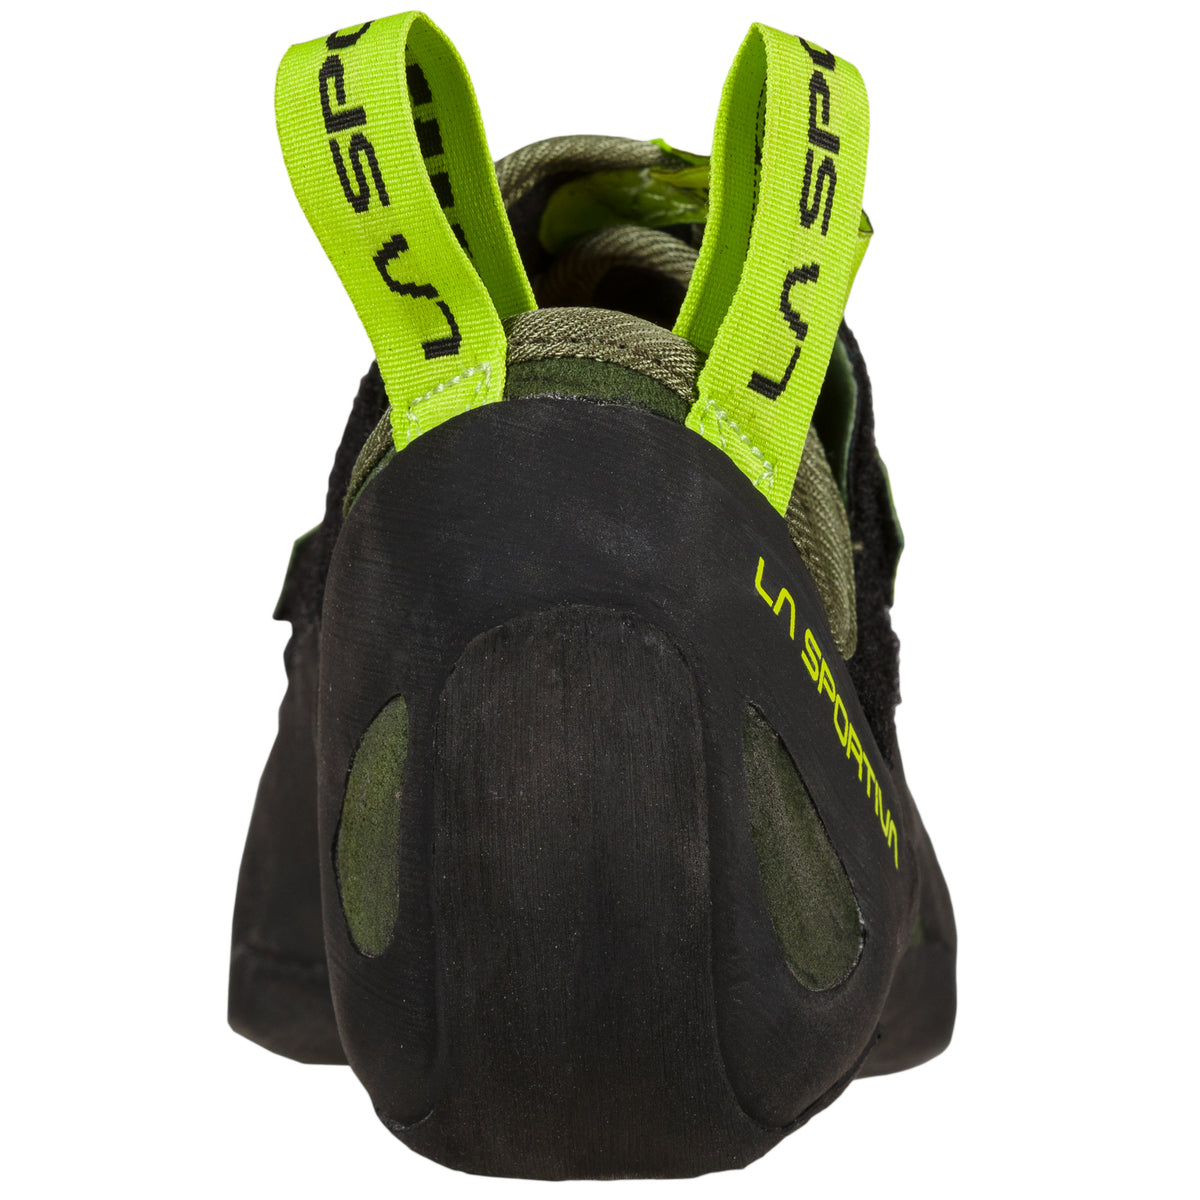 La Sportiva Tarantula in olive/neon colour showing heel and pull straps